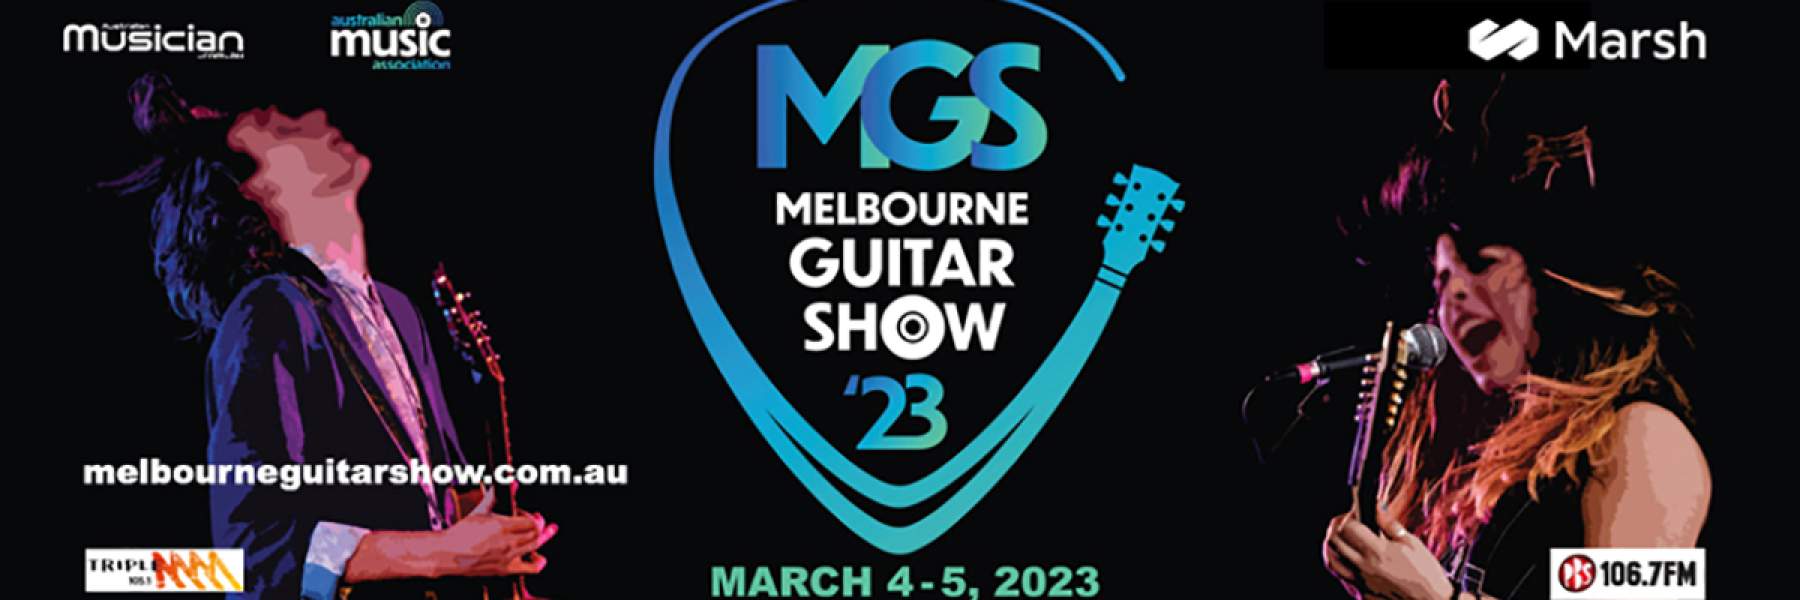 Melbourne Guitar Show banner